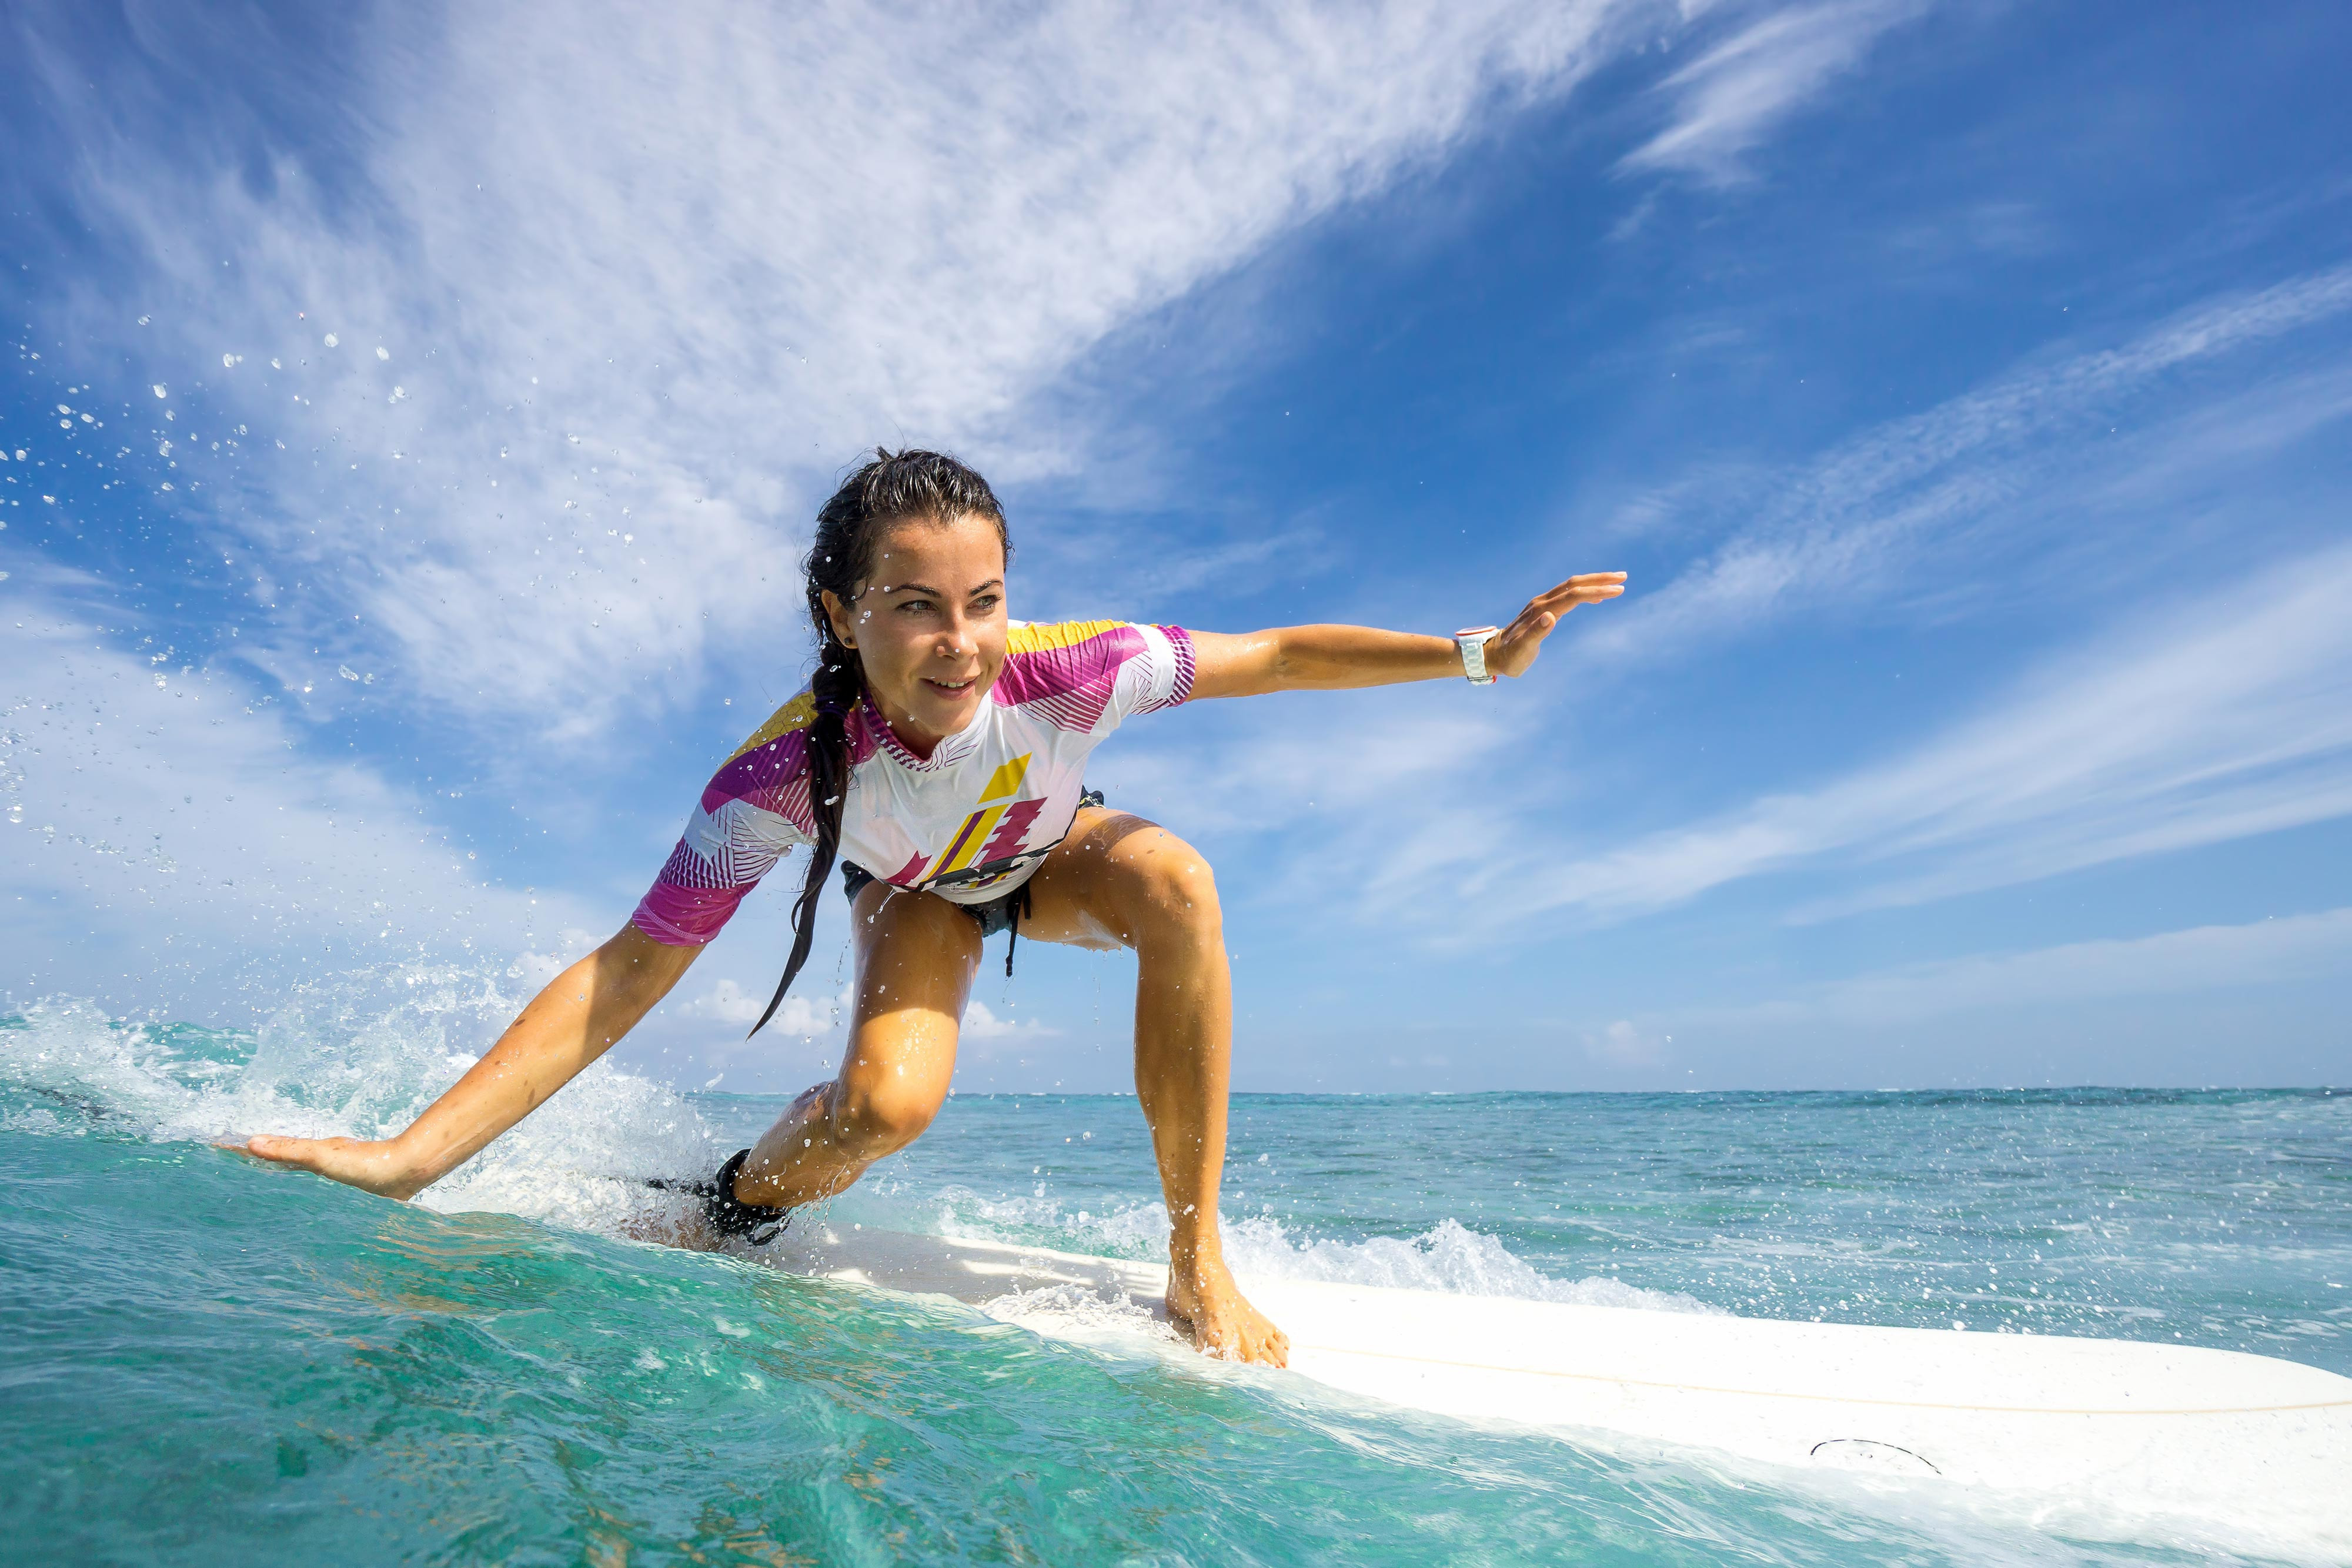 Atlantic Surfing Woman Action Shot - Westgate Cocoa Beach Pier